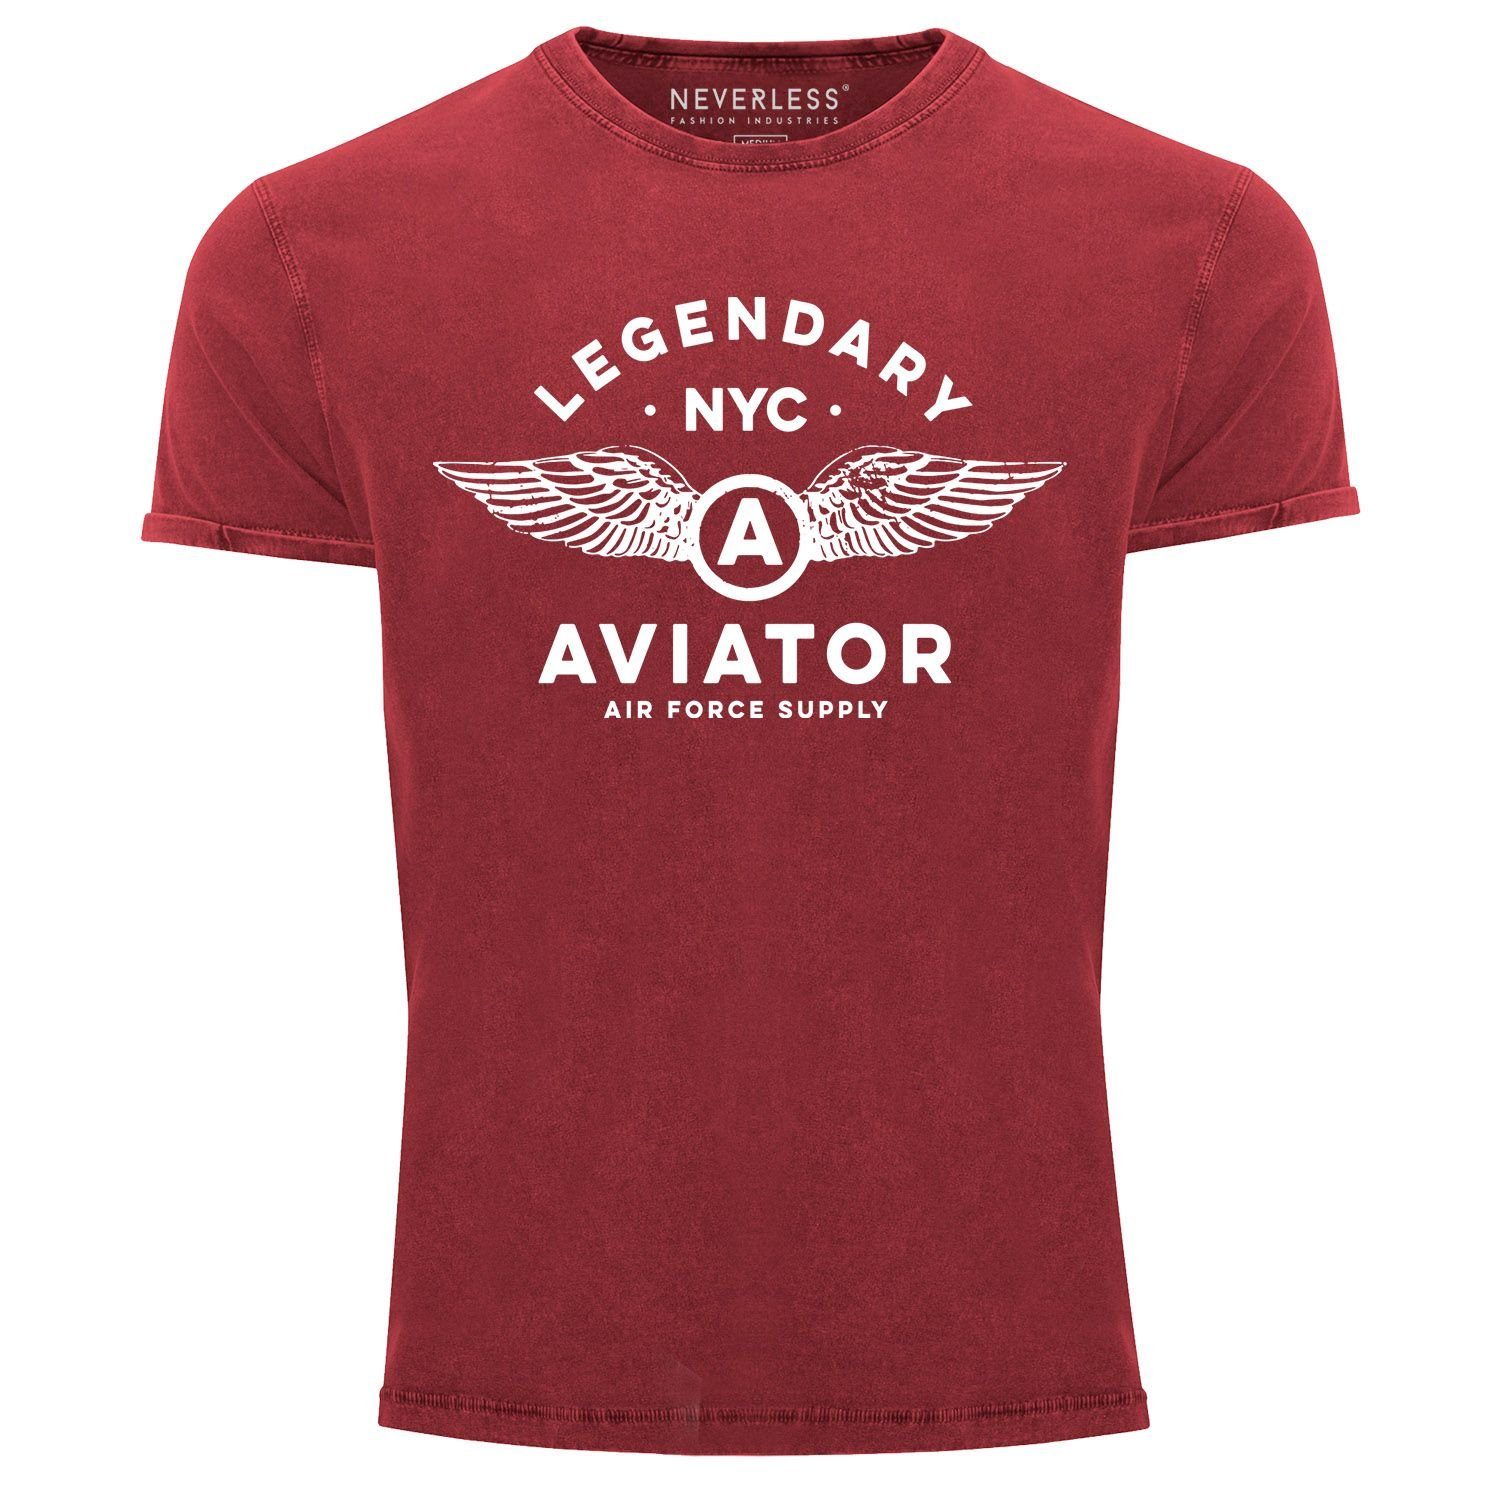 Neverless Print-Shirt Herren Vintage Shirt Legendary NYC Aviator Air Force Luftwaffe Flügel Printshirt Used Look Slim Fit Neverless® mit Print rot | T-Shirts